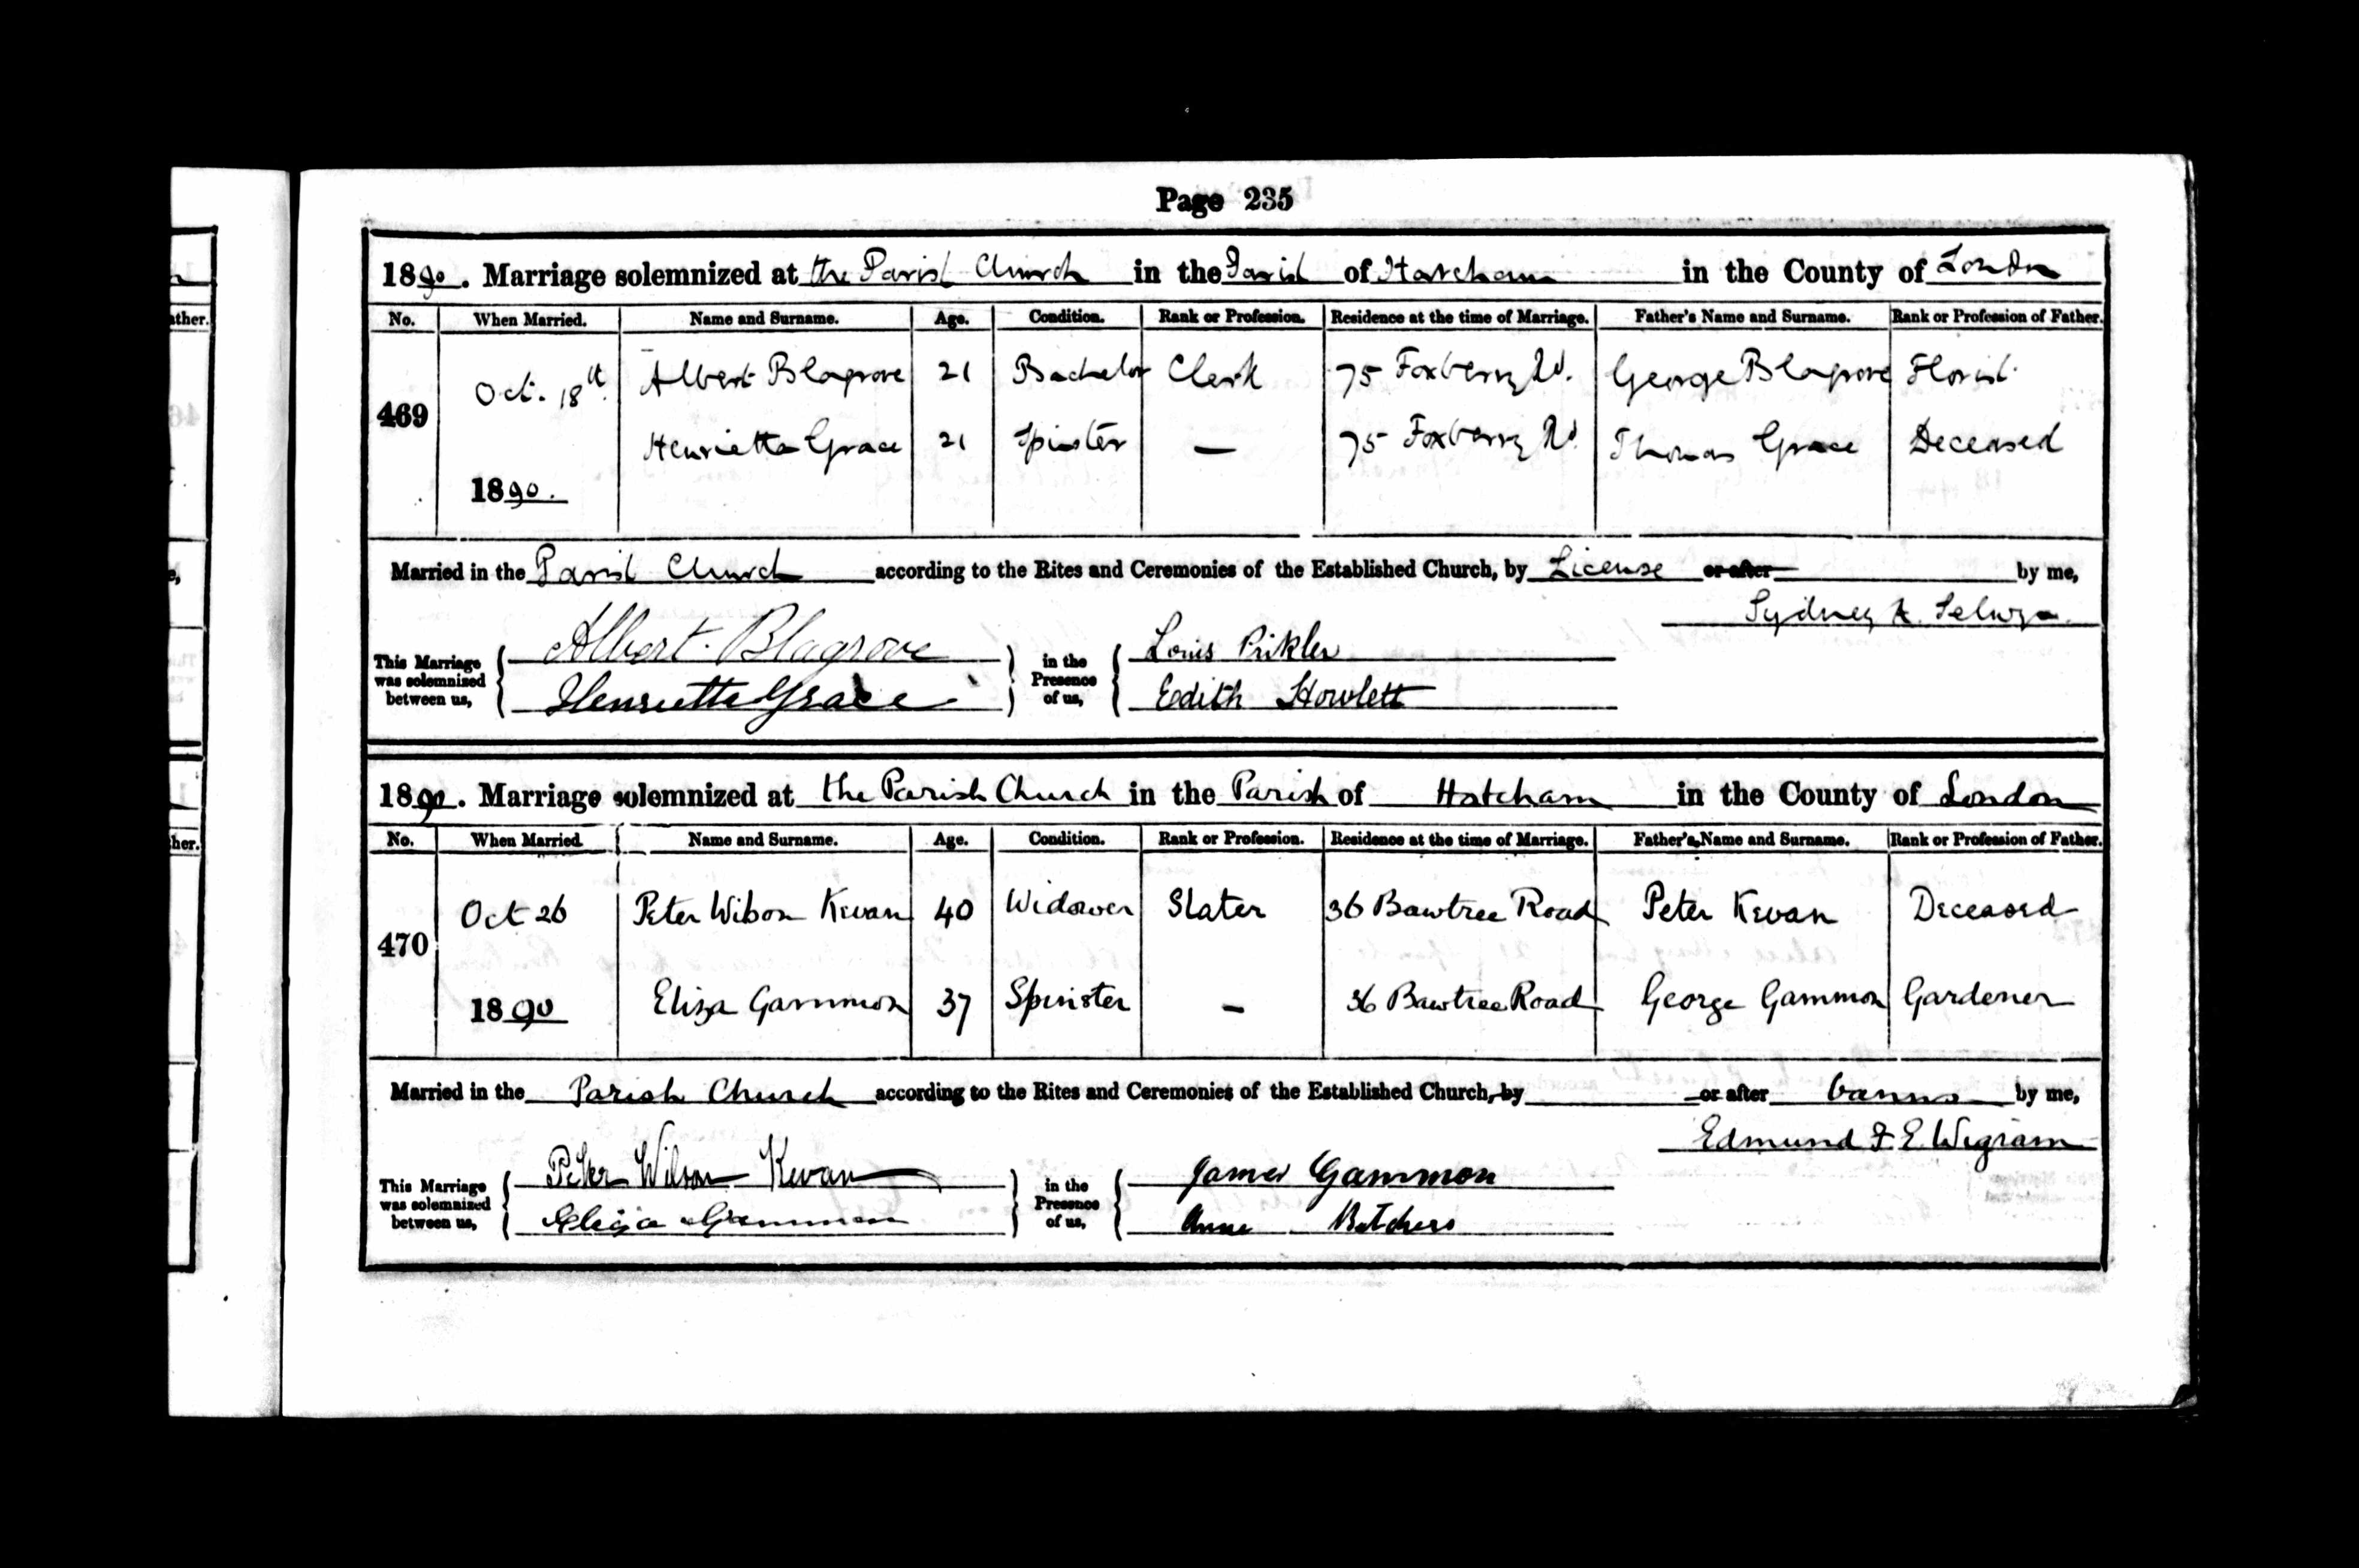 1890 marriage of Eliza Gammon to Peter Wilson Kevan